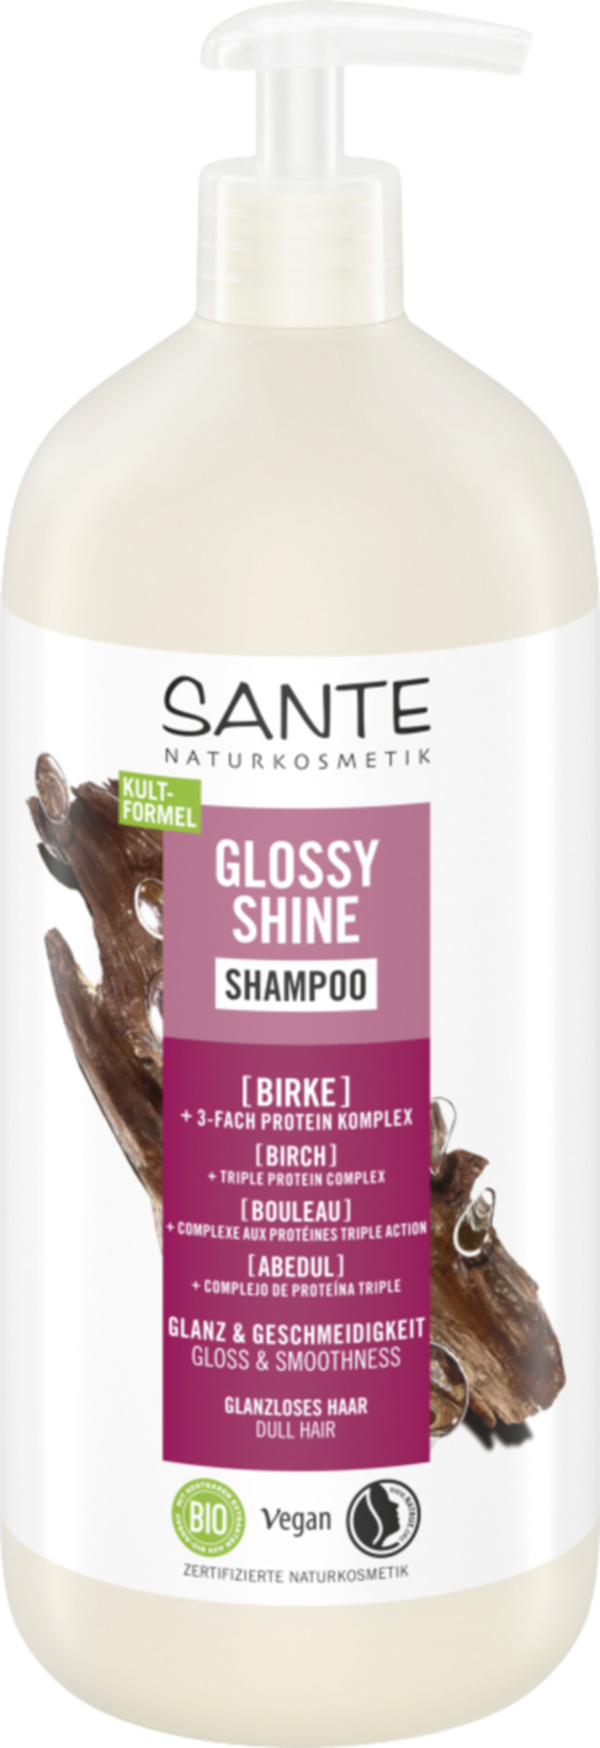 Bild 1 von Sante Glossy Shine Shampoo